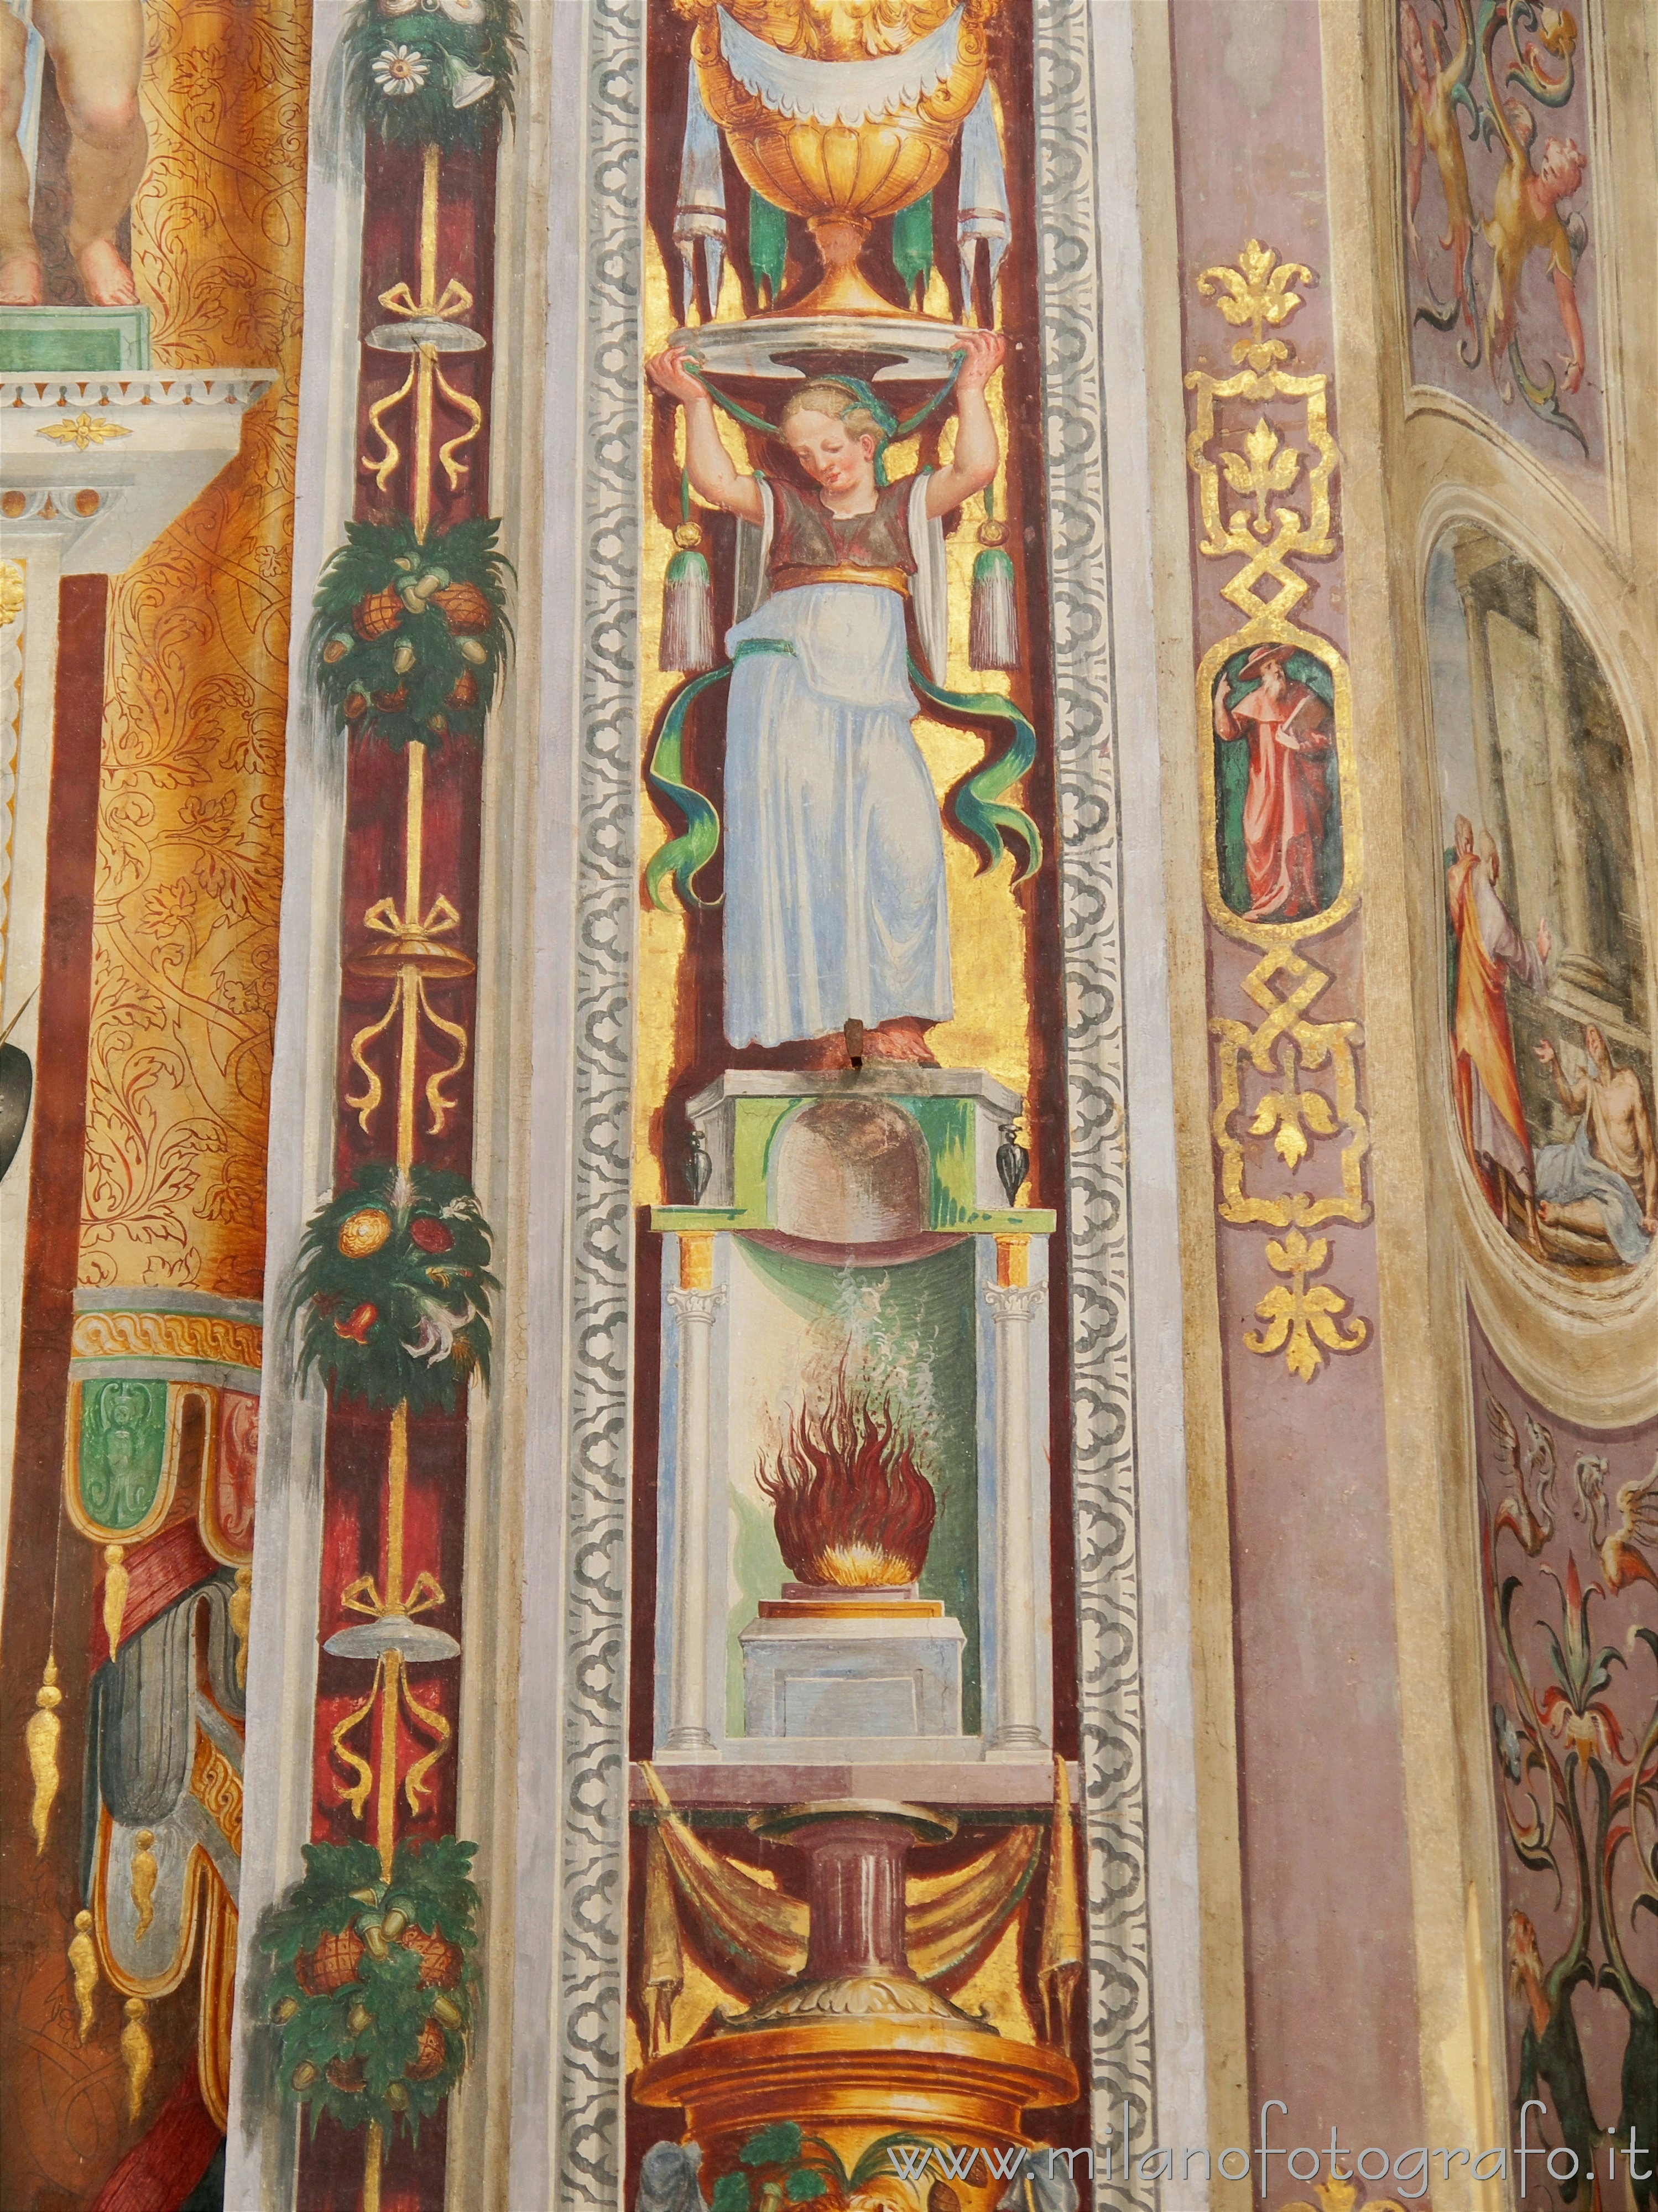 Meda (Monza e Brianza, Italy): Renaissance decorations in the Church of San Vittore - Meda (Monza e Brianza, Italy)